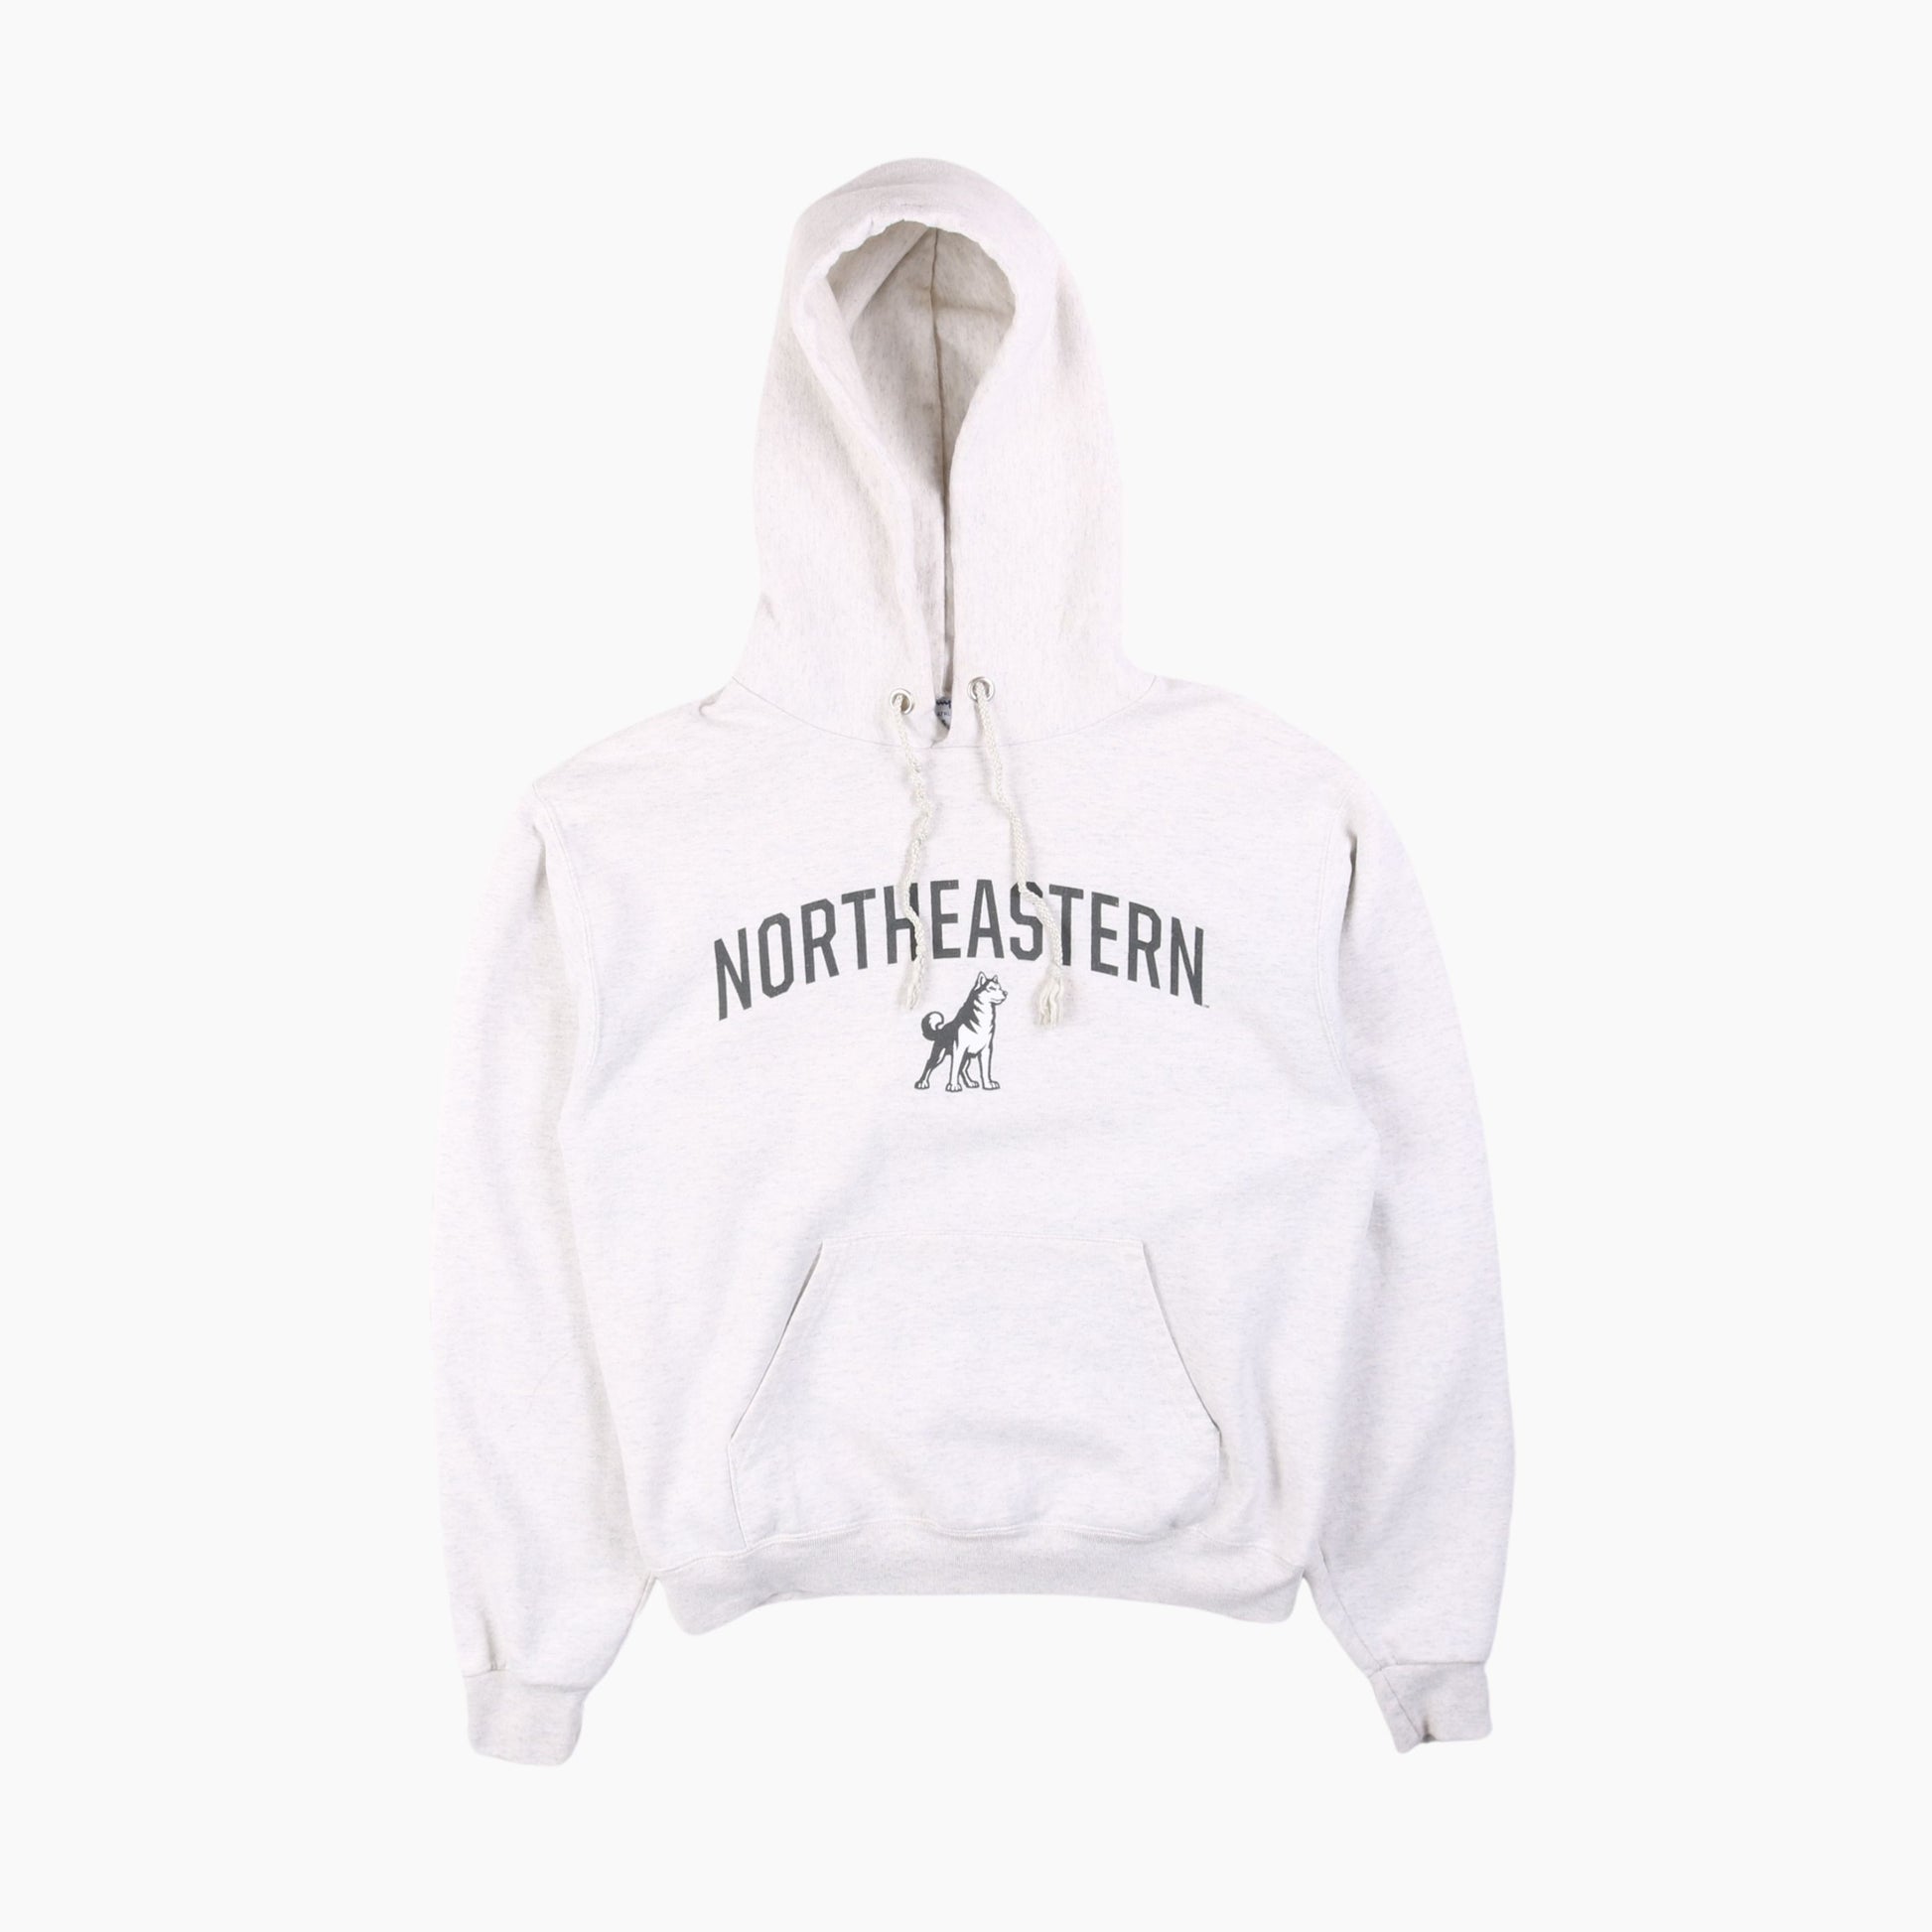 Vintage 'Northeastern' Champion Hooded Sweatshirt - American Madness